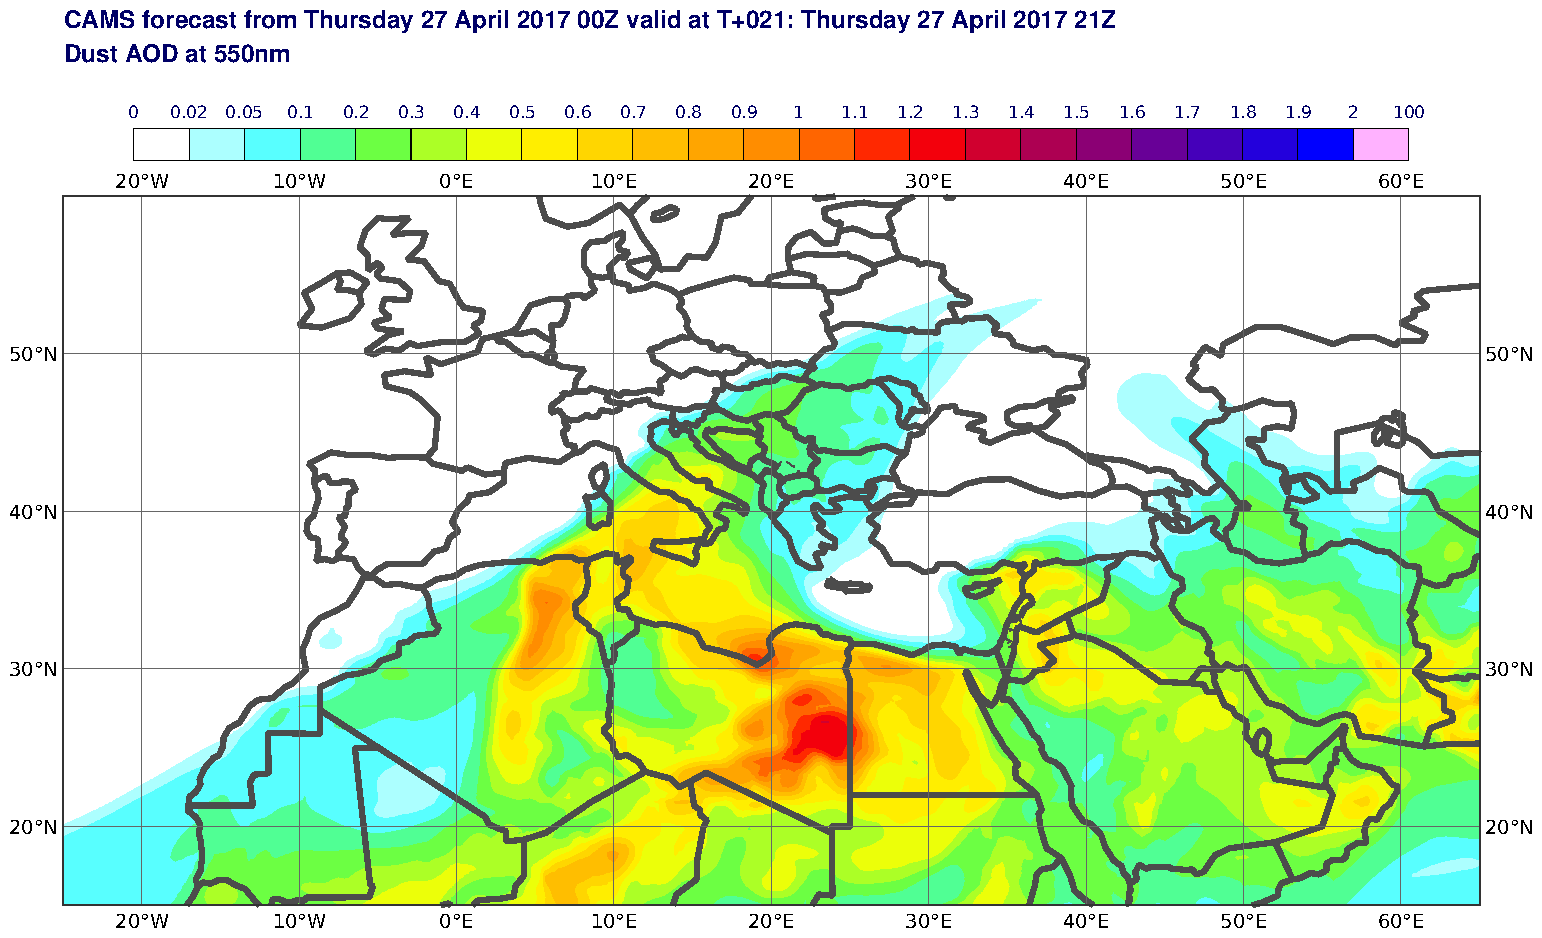 Dust AOD at 550nm valid at T21 - 2017-04-27 21:00